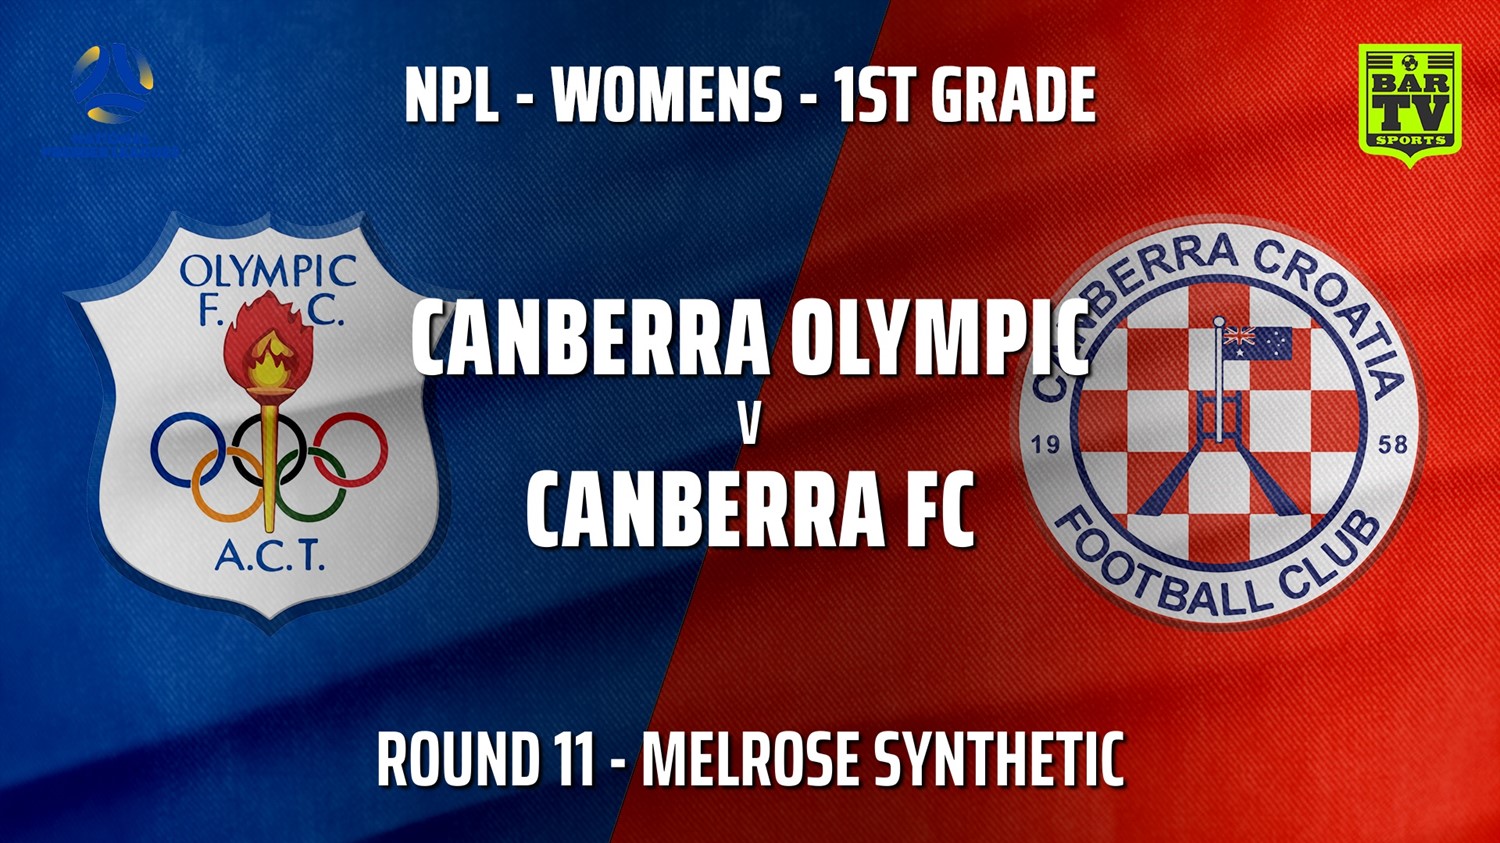 210627-Capital Womens Round 11 - Canberra Olympic FC (women) v Canberra FC (women) Minigame Slate Image